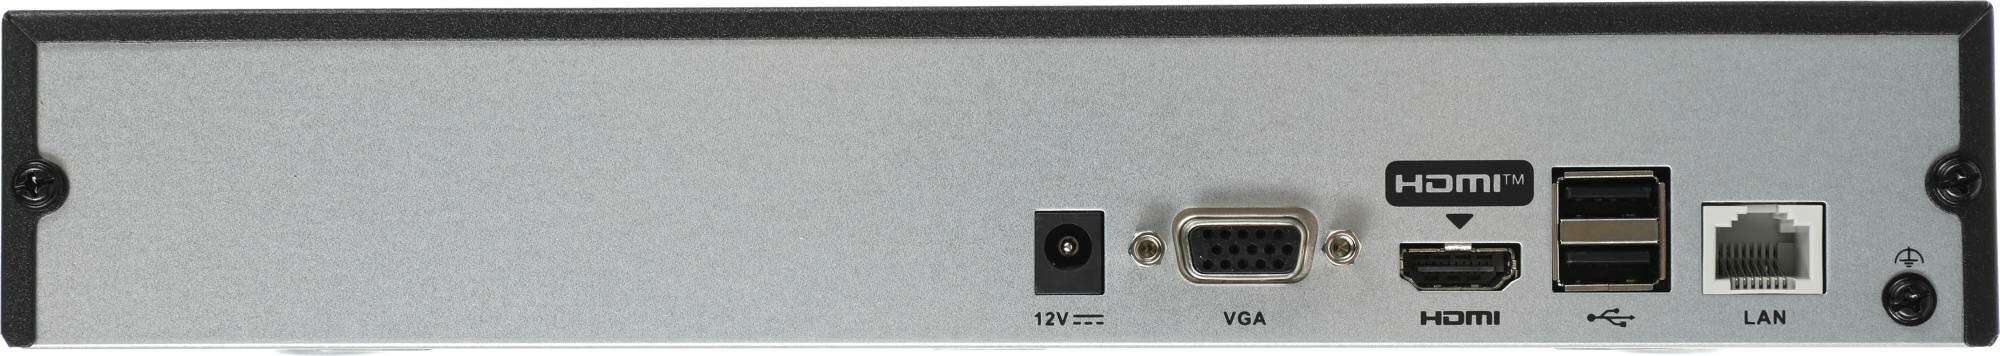 Hikvision IP-видеорегистратор DS-7108NI-Q1/M(C)